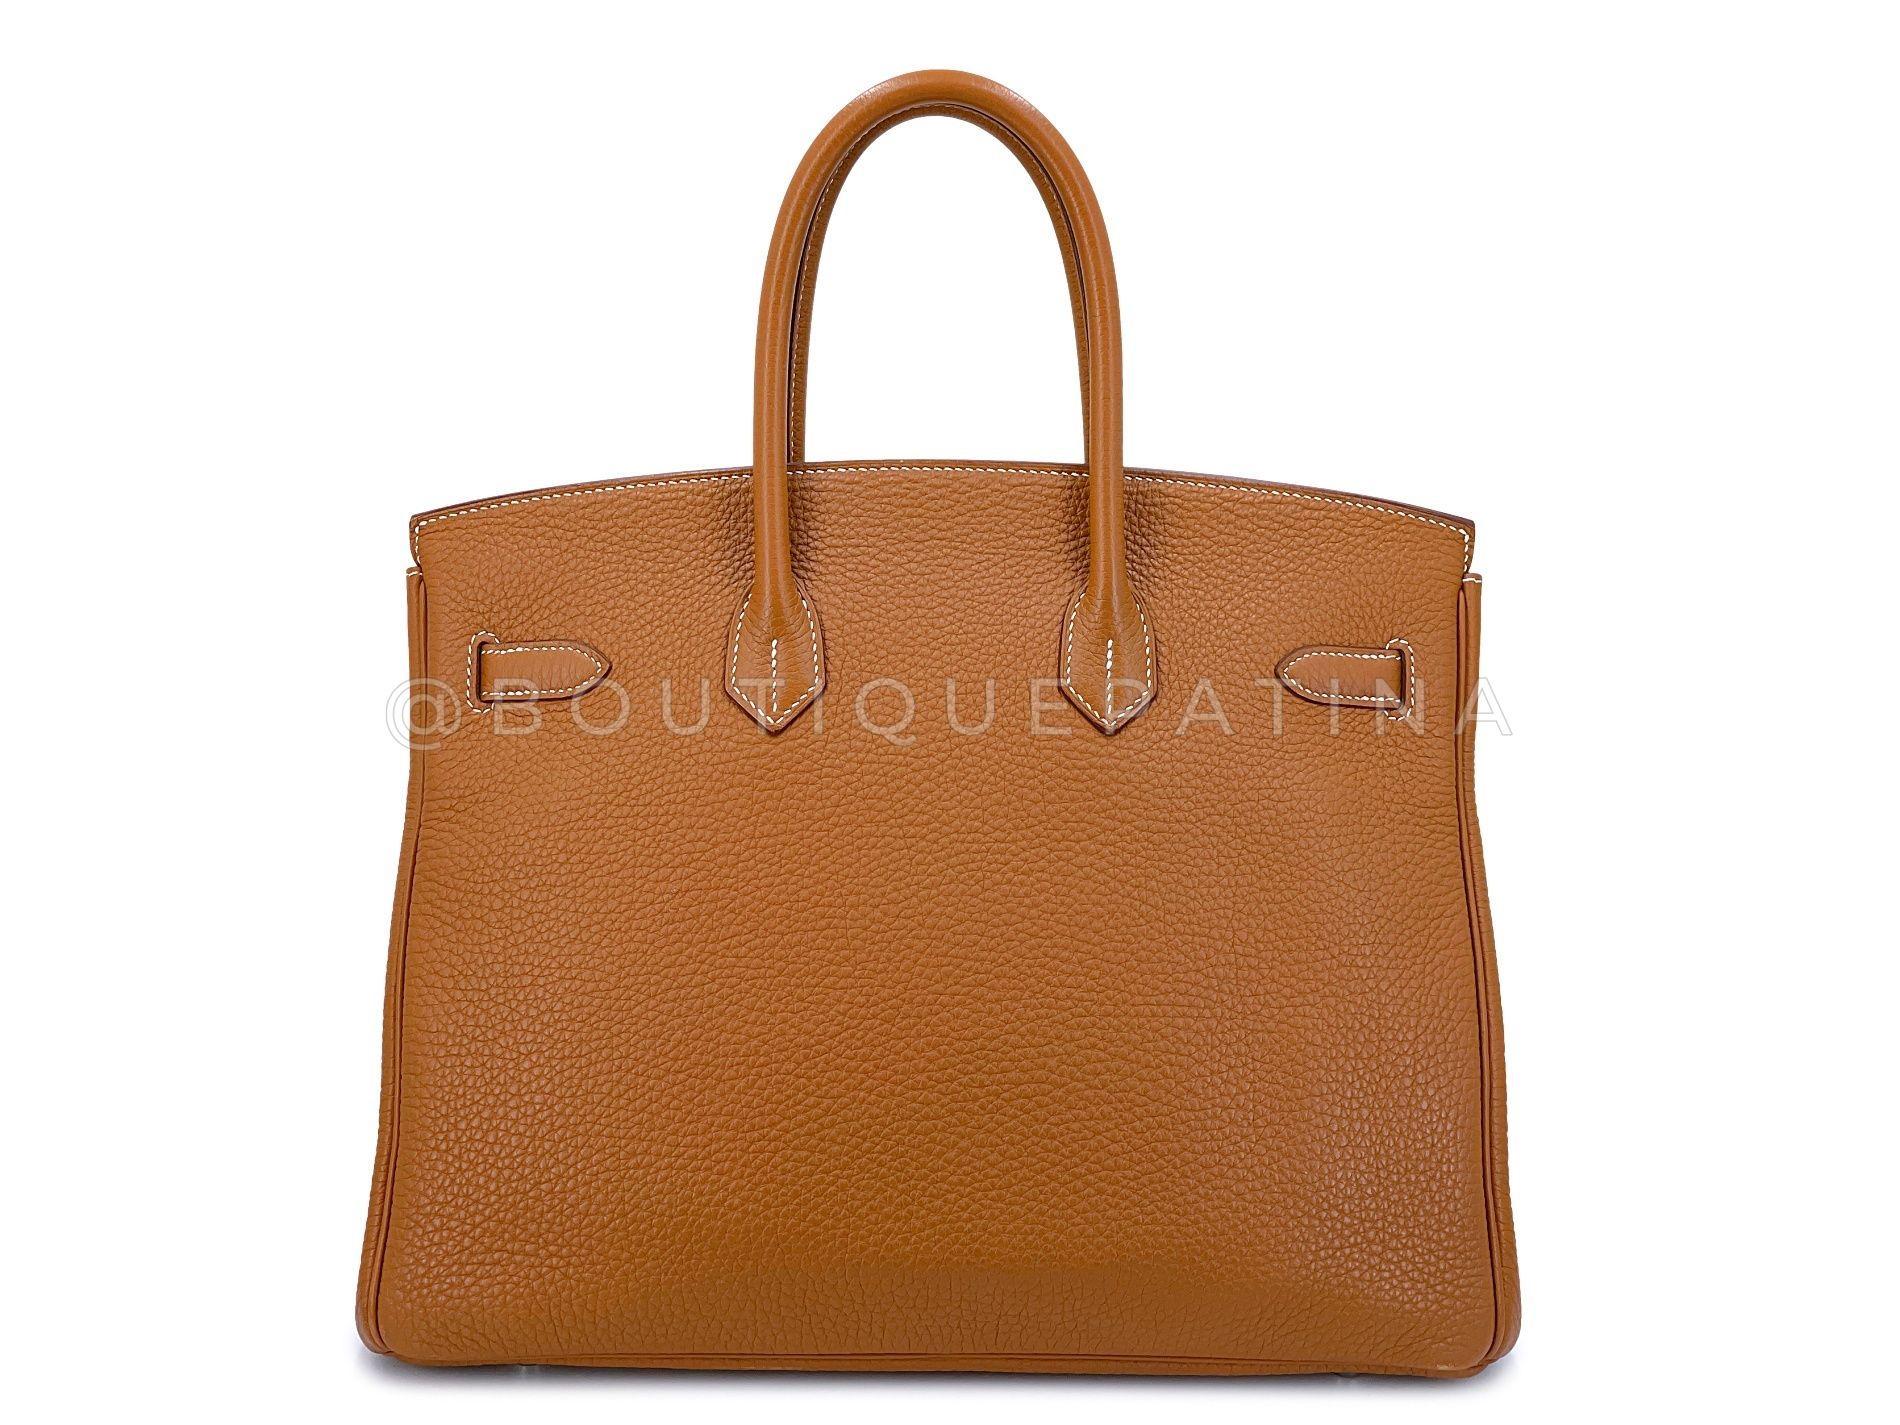 Women's Hermès Gold Togo Birkin Tote Bag 35cm PHW Camel Brown 68060 For Sale